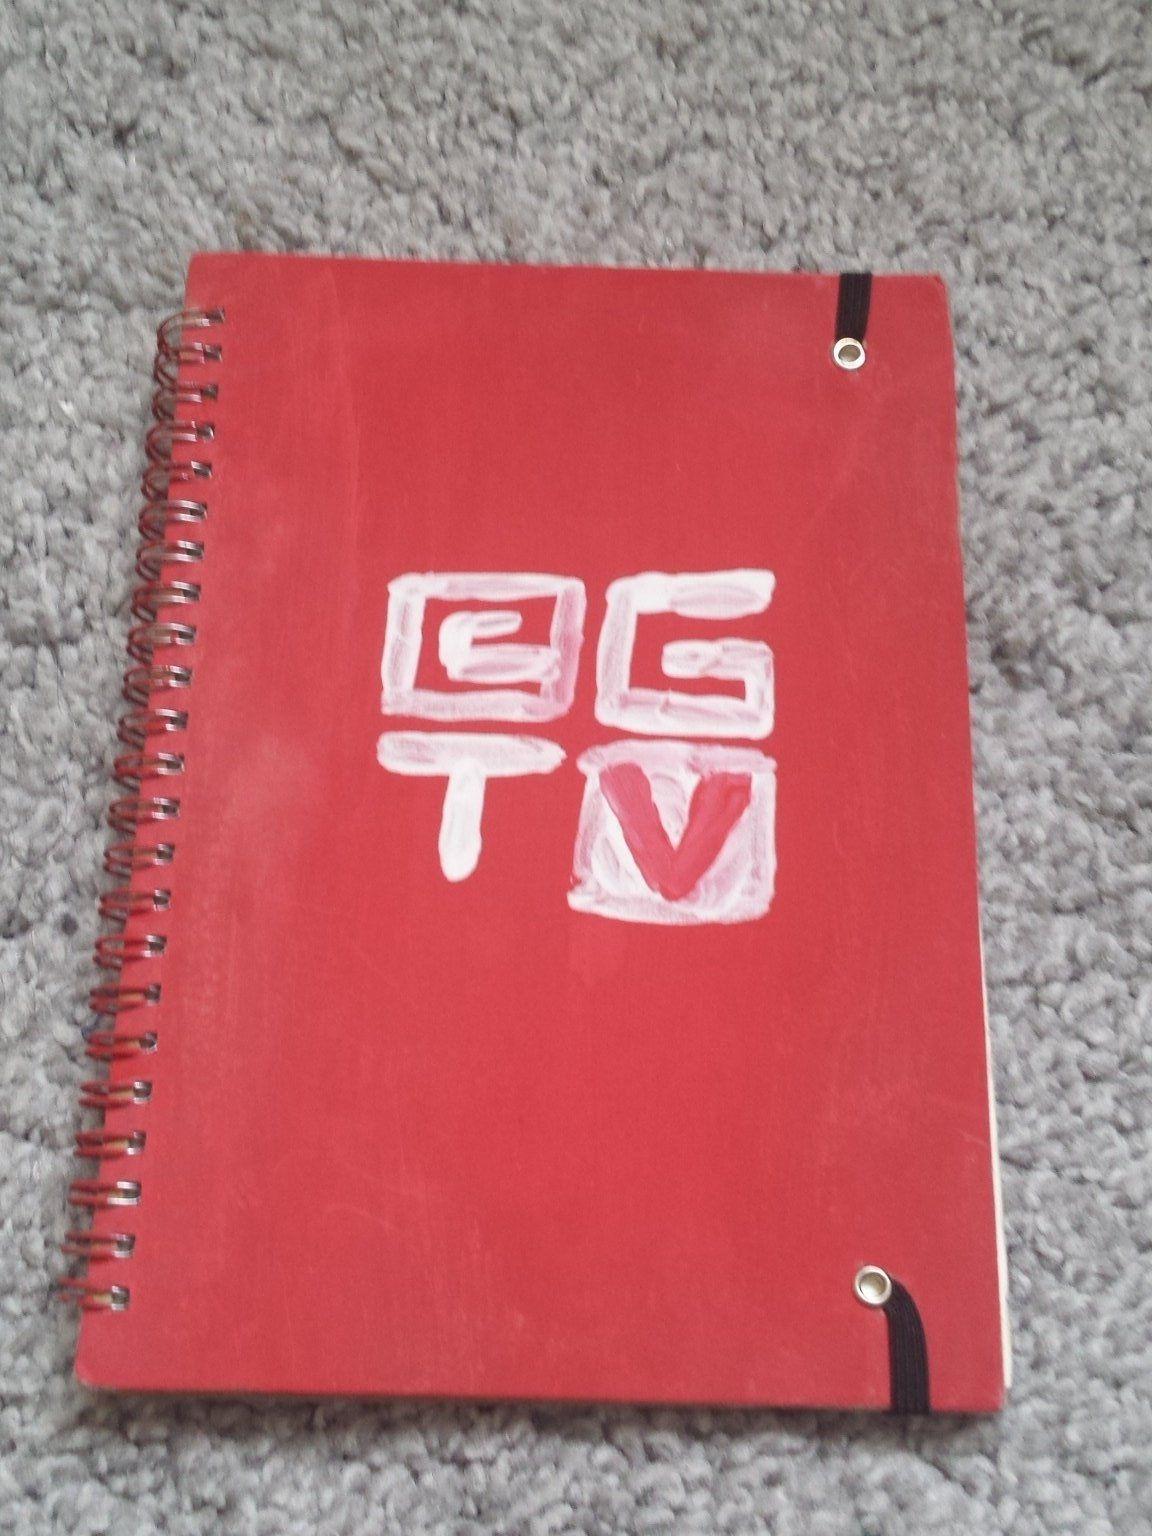 Egtv Logo - Mayz - Painted the EGTV logo on the back